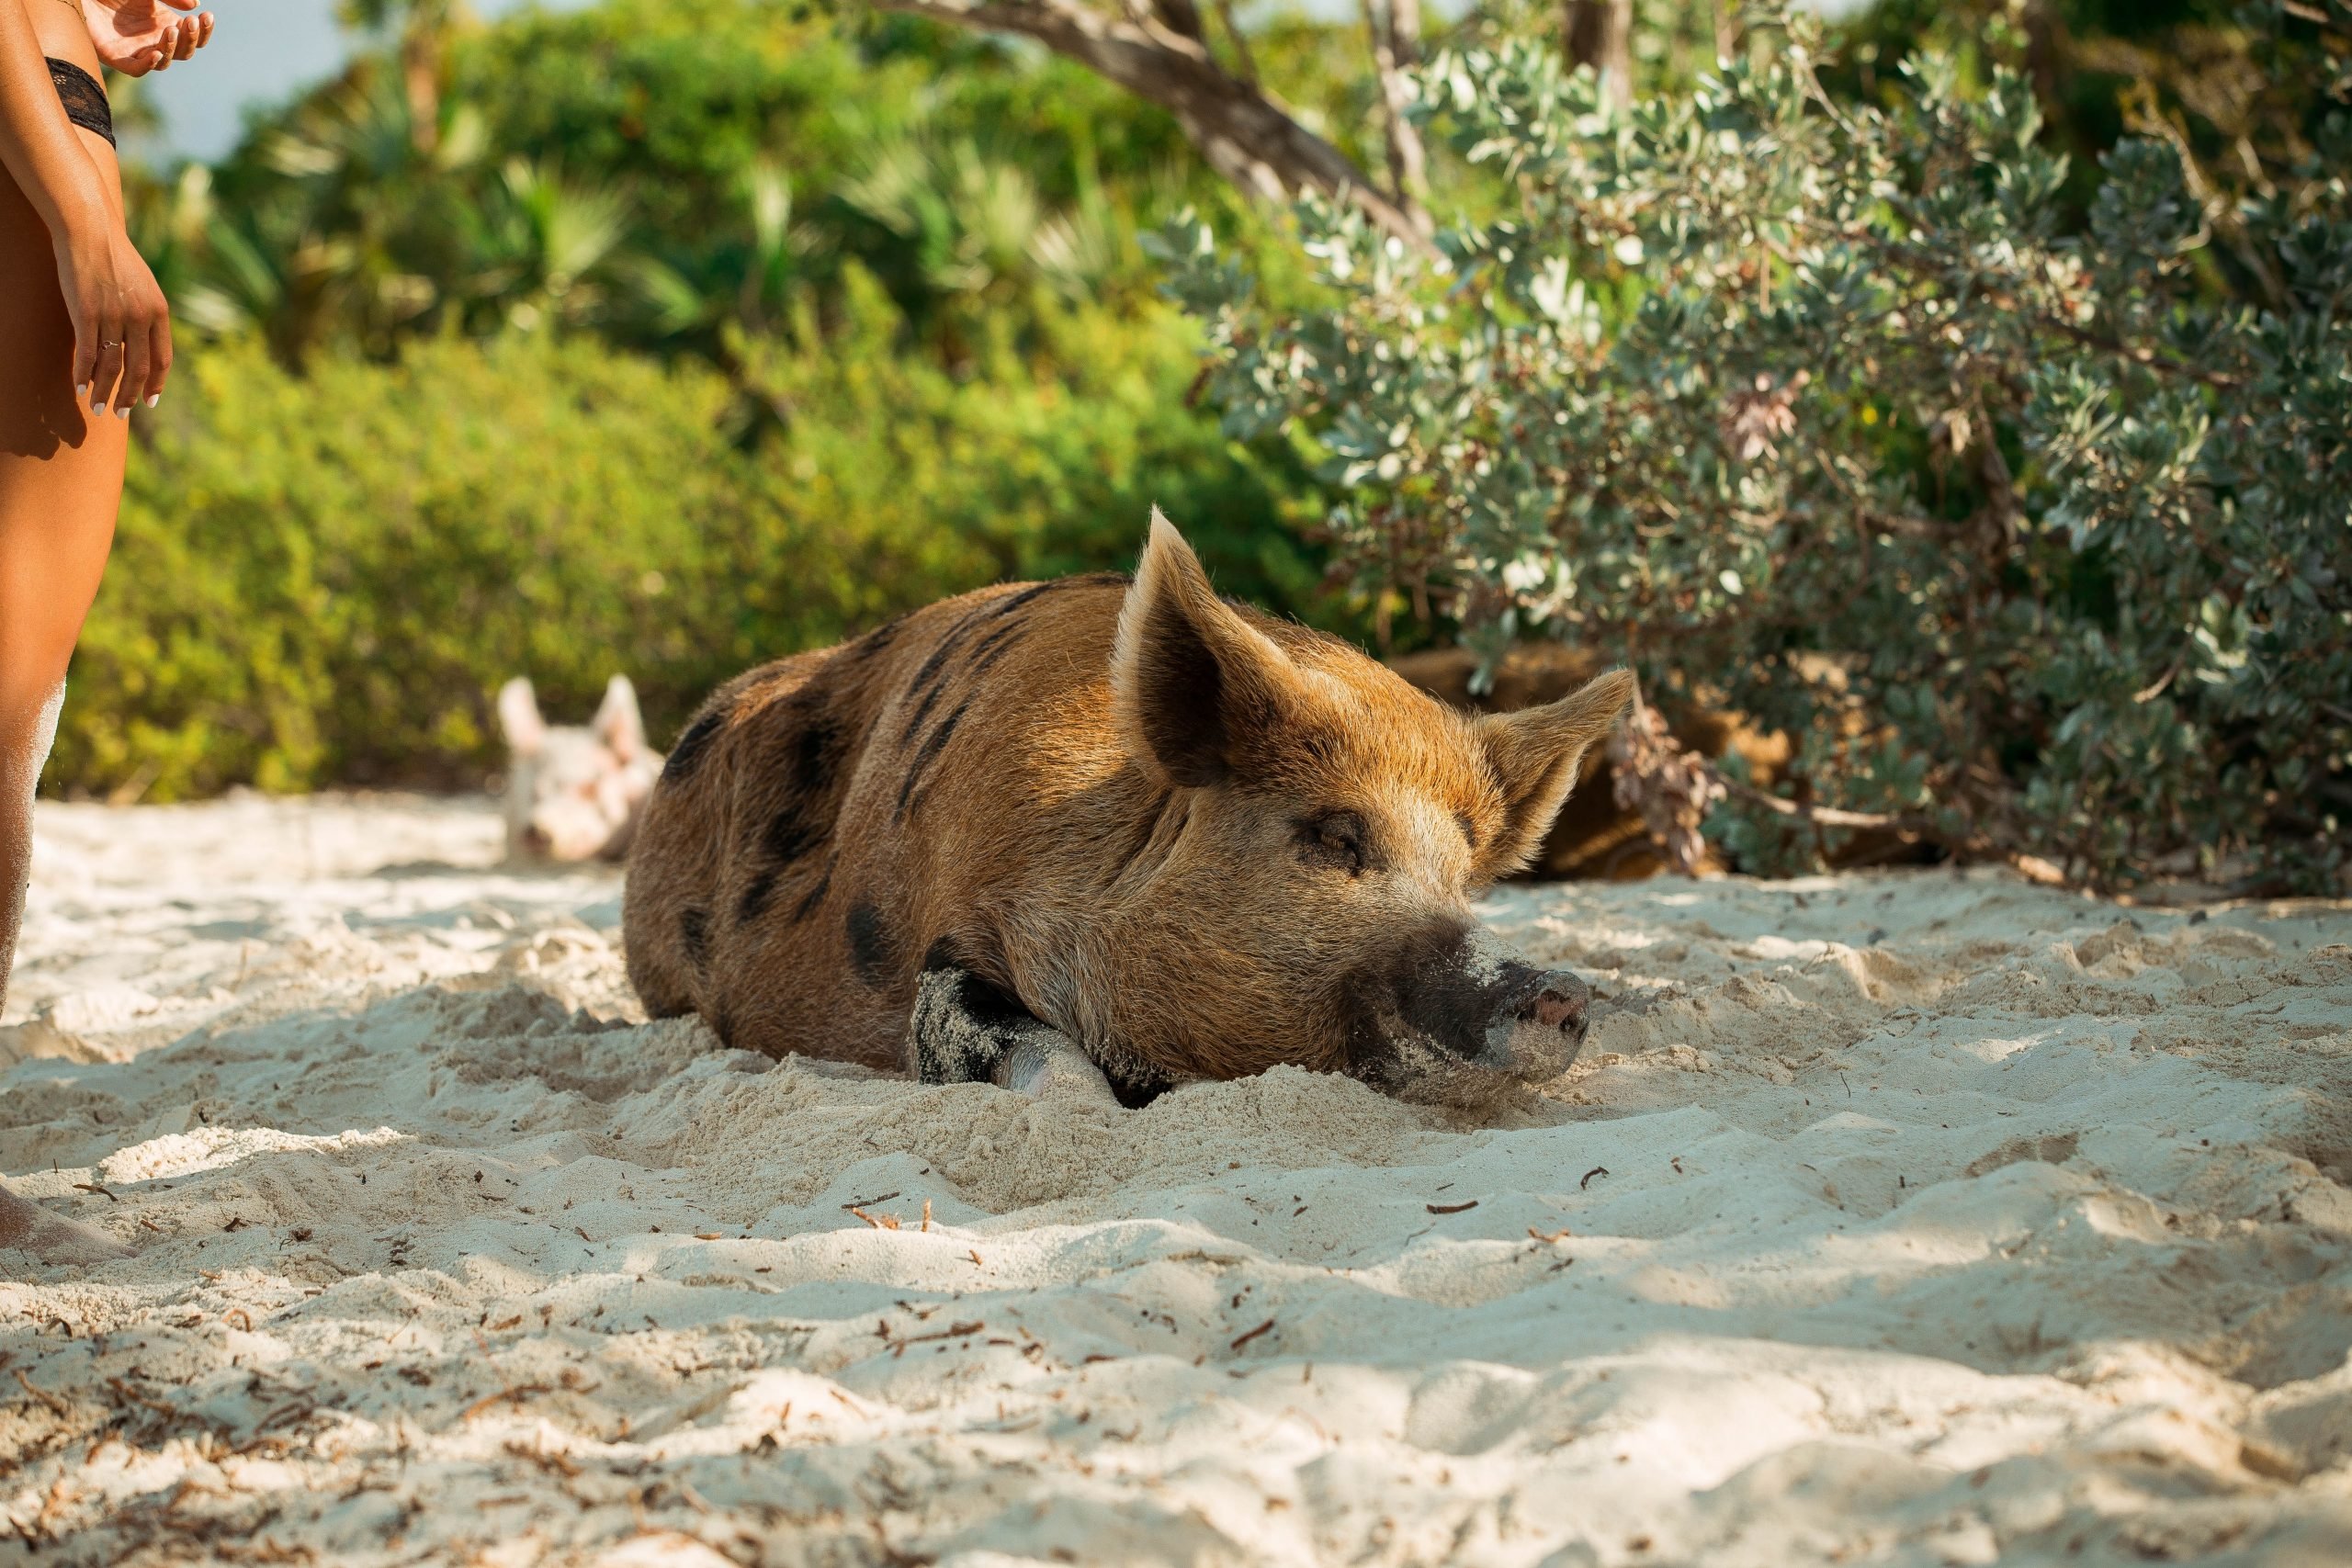 Pig Beach in the Bahamas